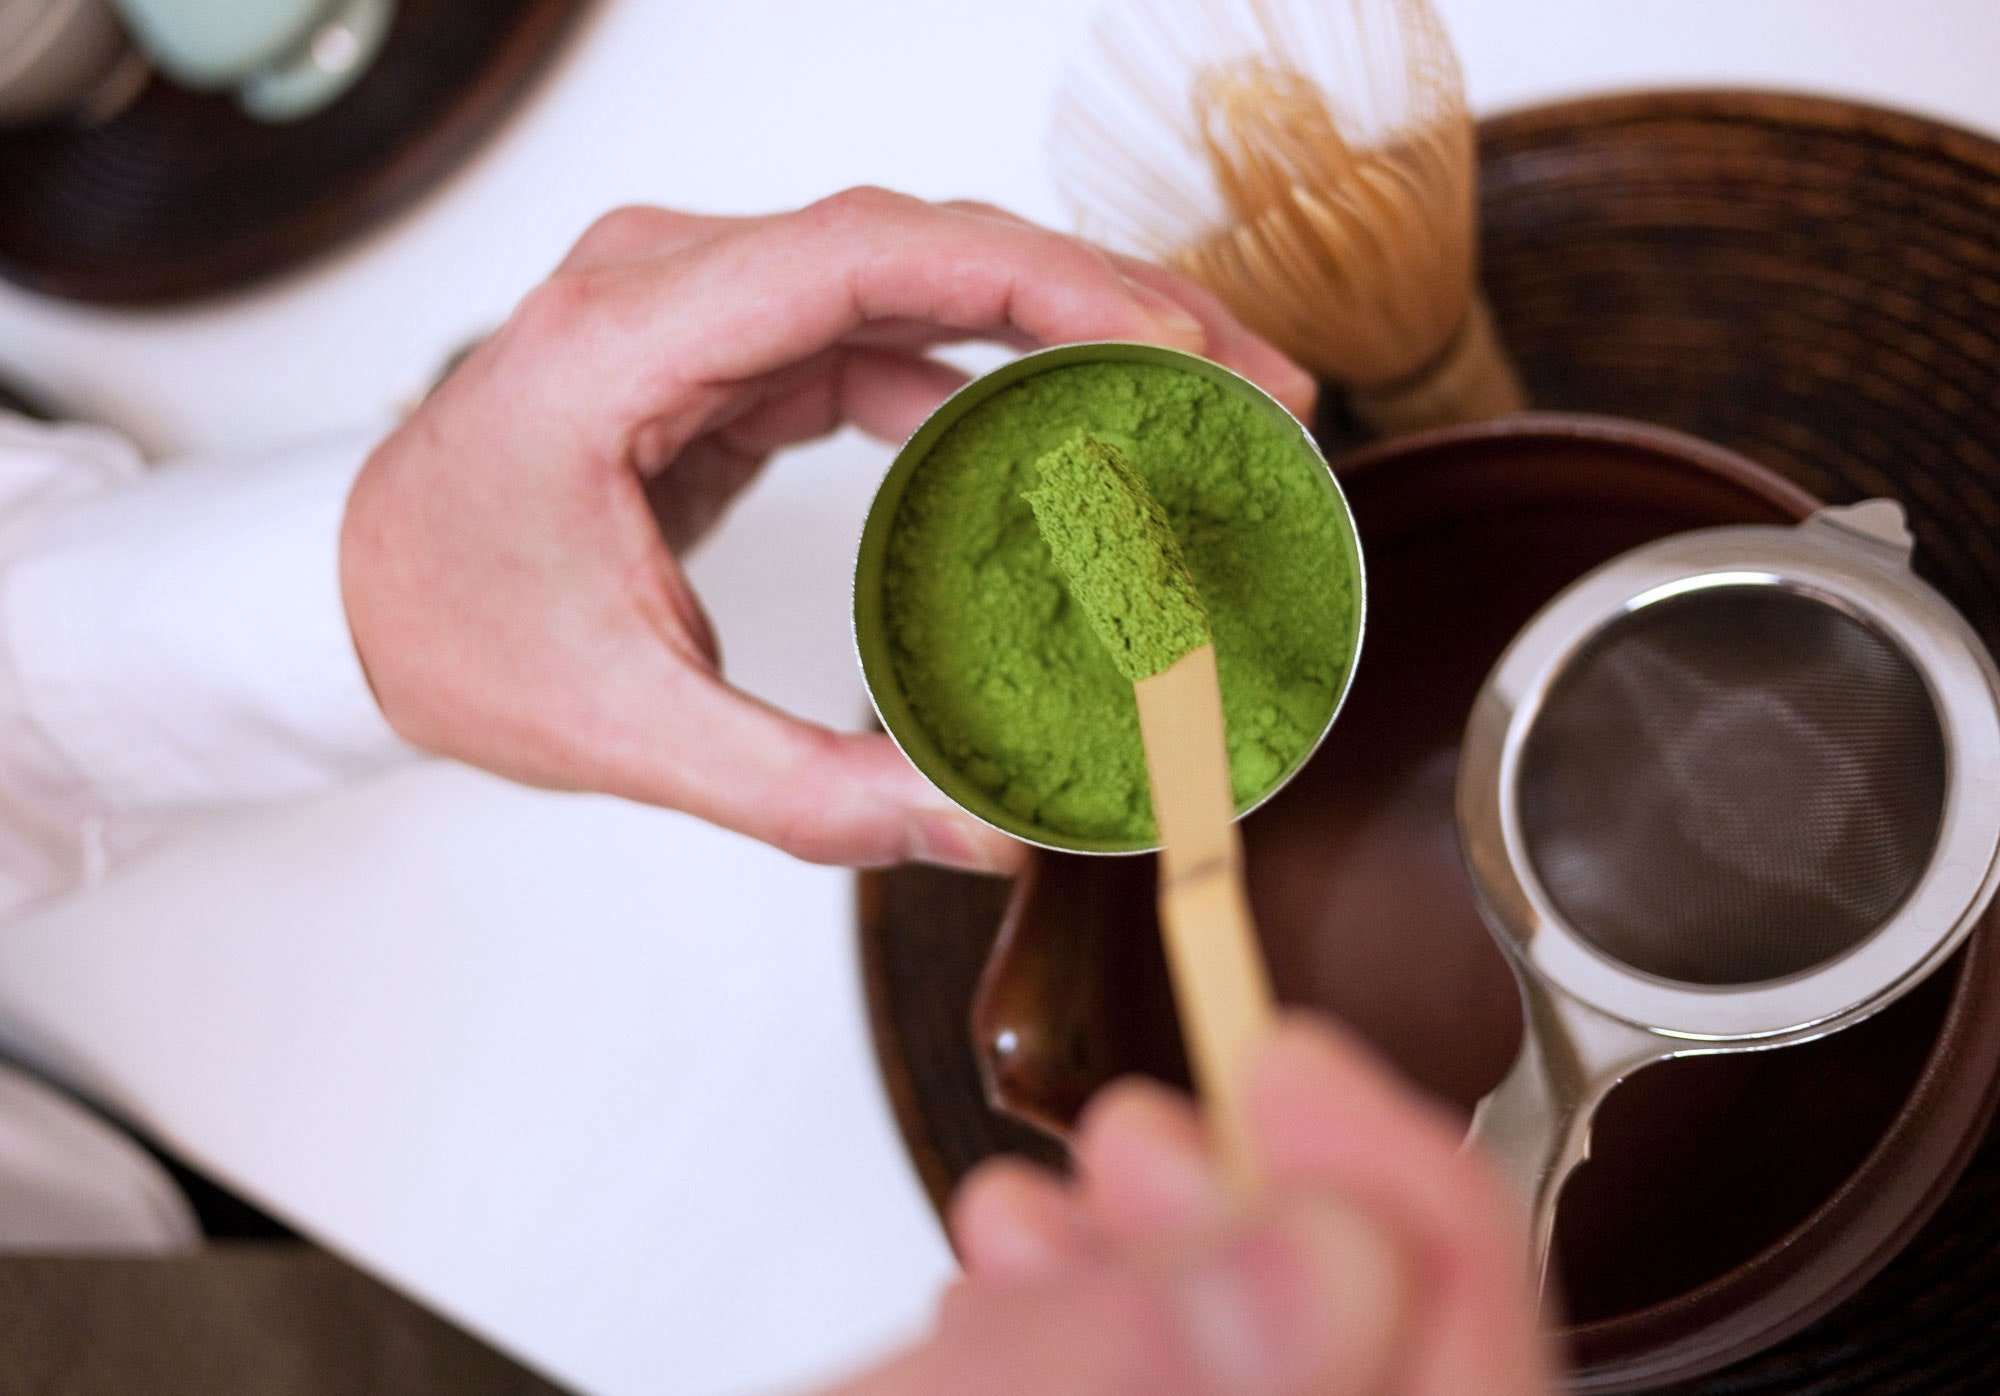 How to Make Matcha, Japanese Green Tea, Step by Step ...